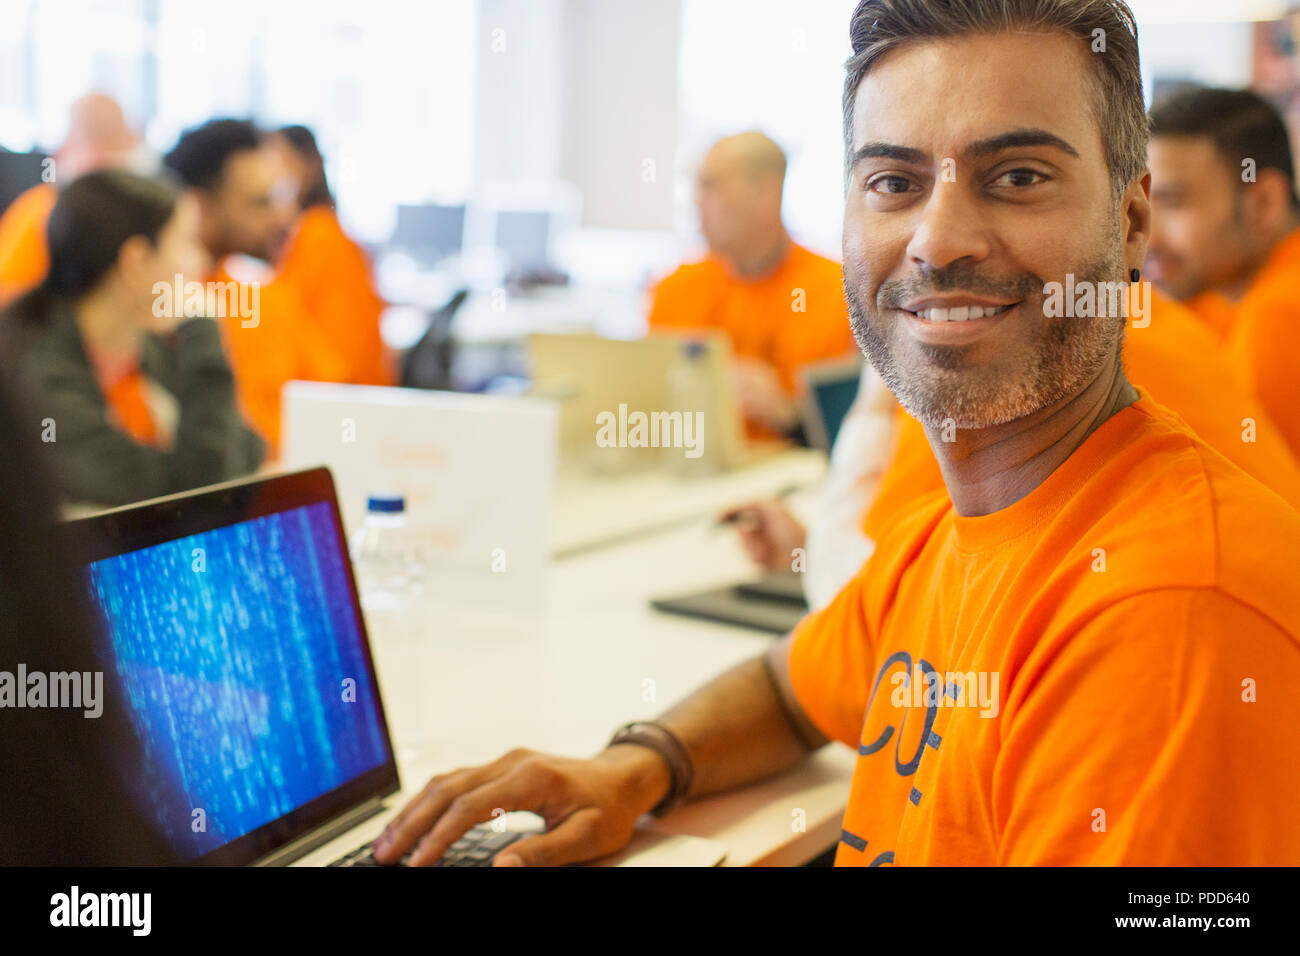 Portrait confident hacker at laptop coding for charity at hackathon Stock Photo